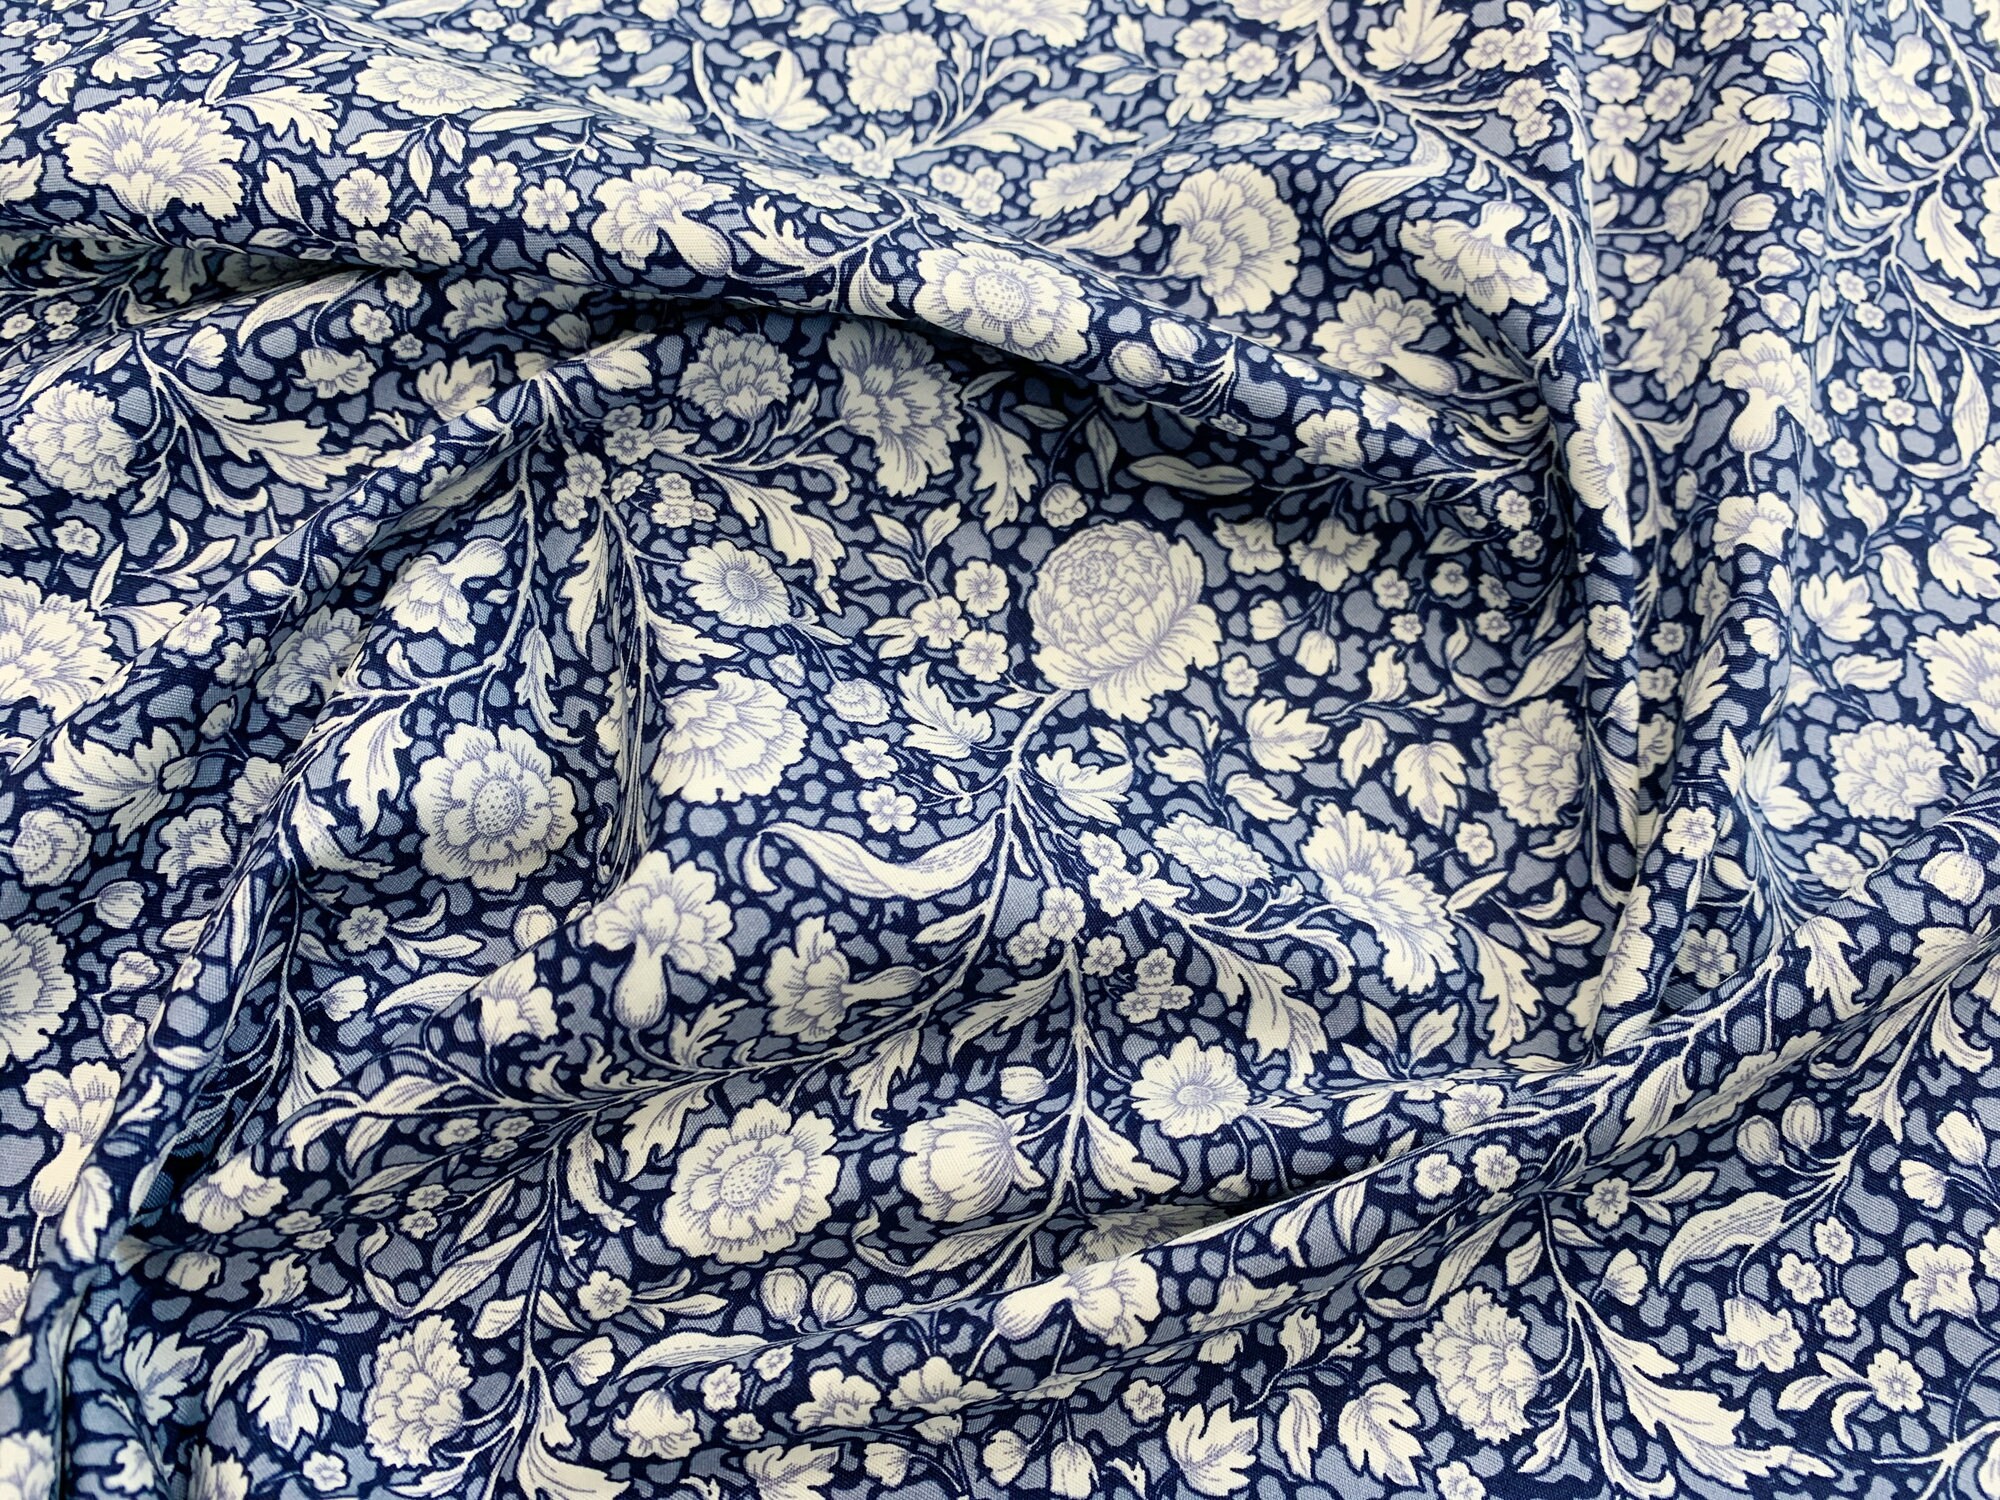 Navy Blue Tree Print on Cotton & Linen Light Canvas Fabric – On